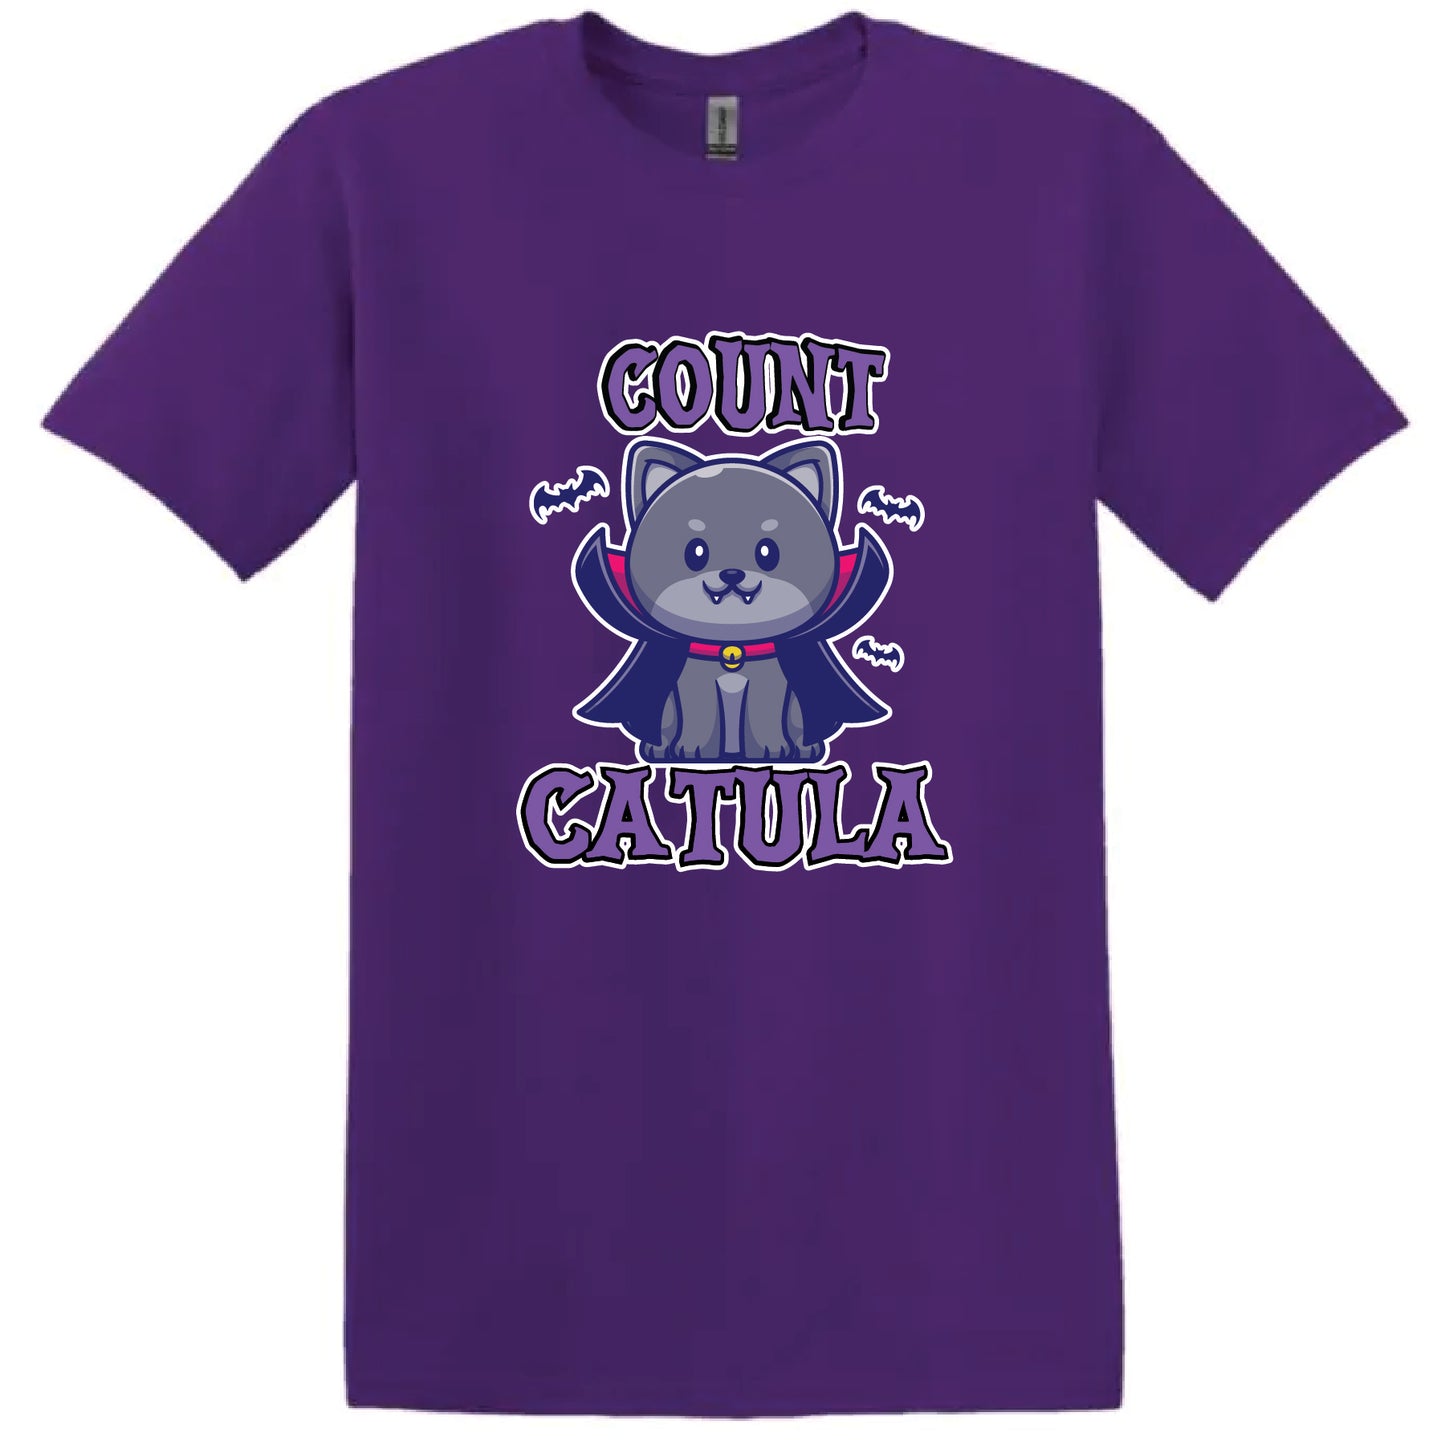 Count Cat-ula Shirt